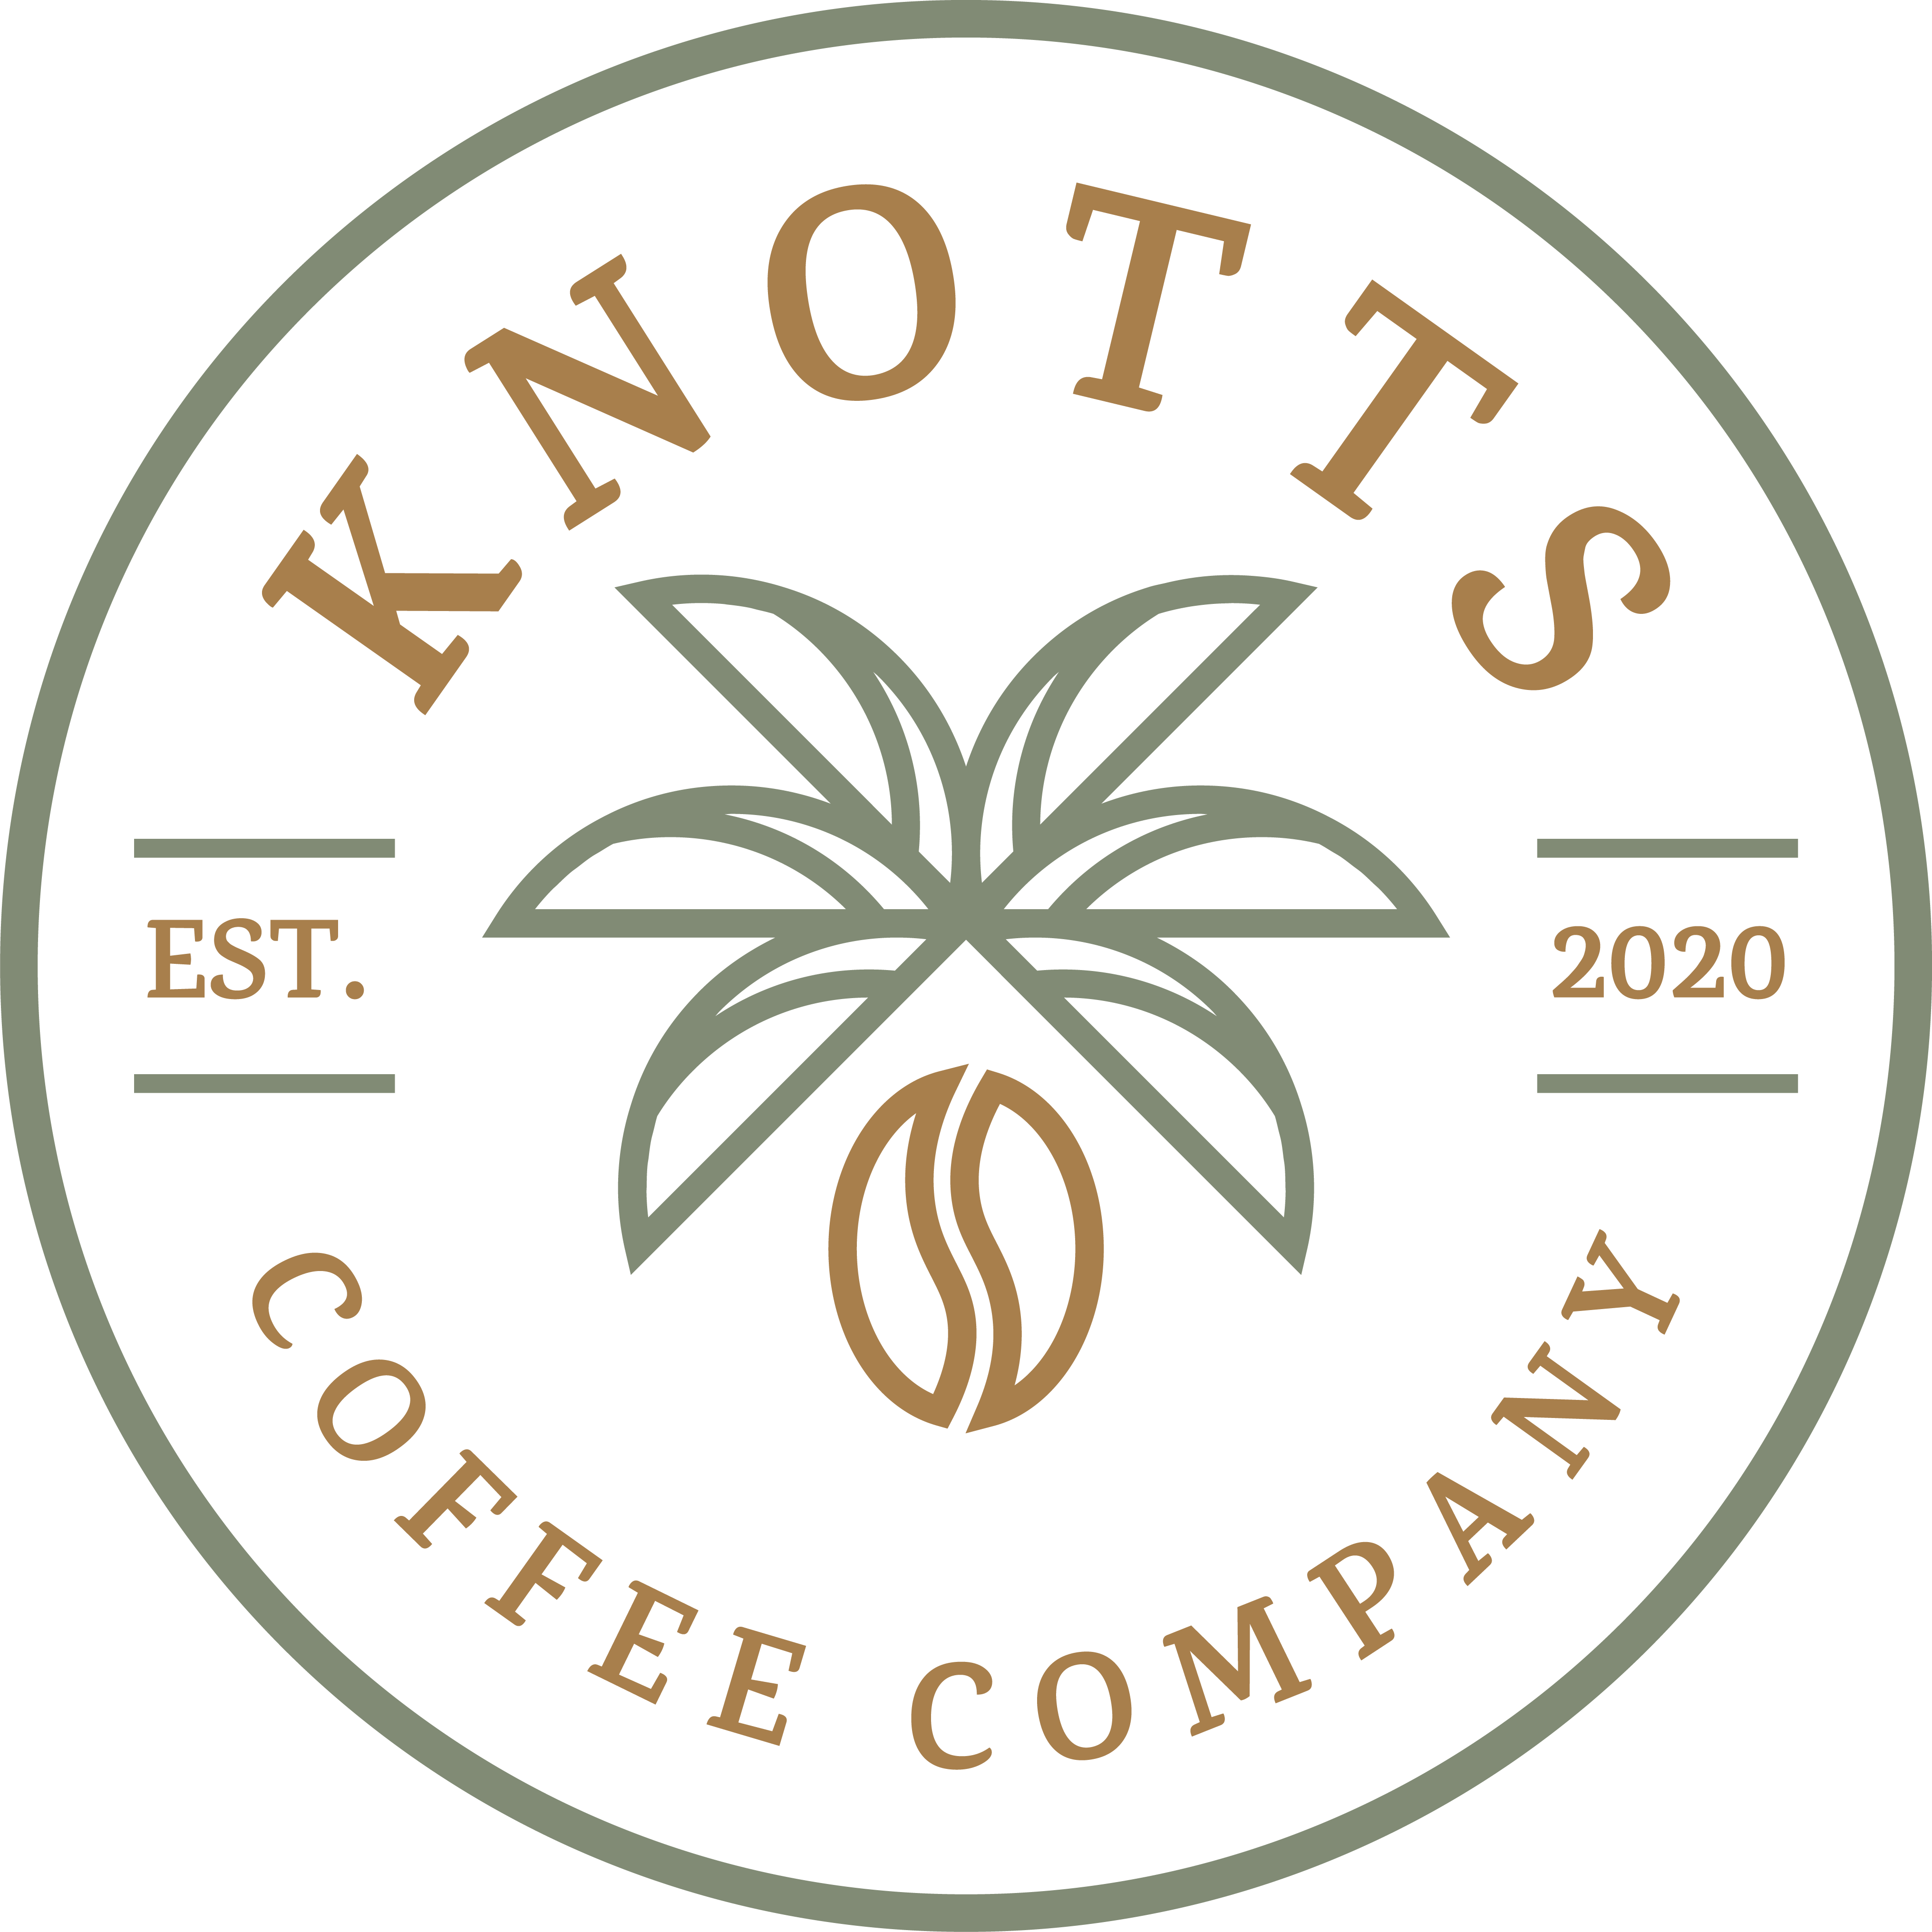 Knotts Coffee Company